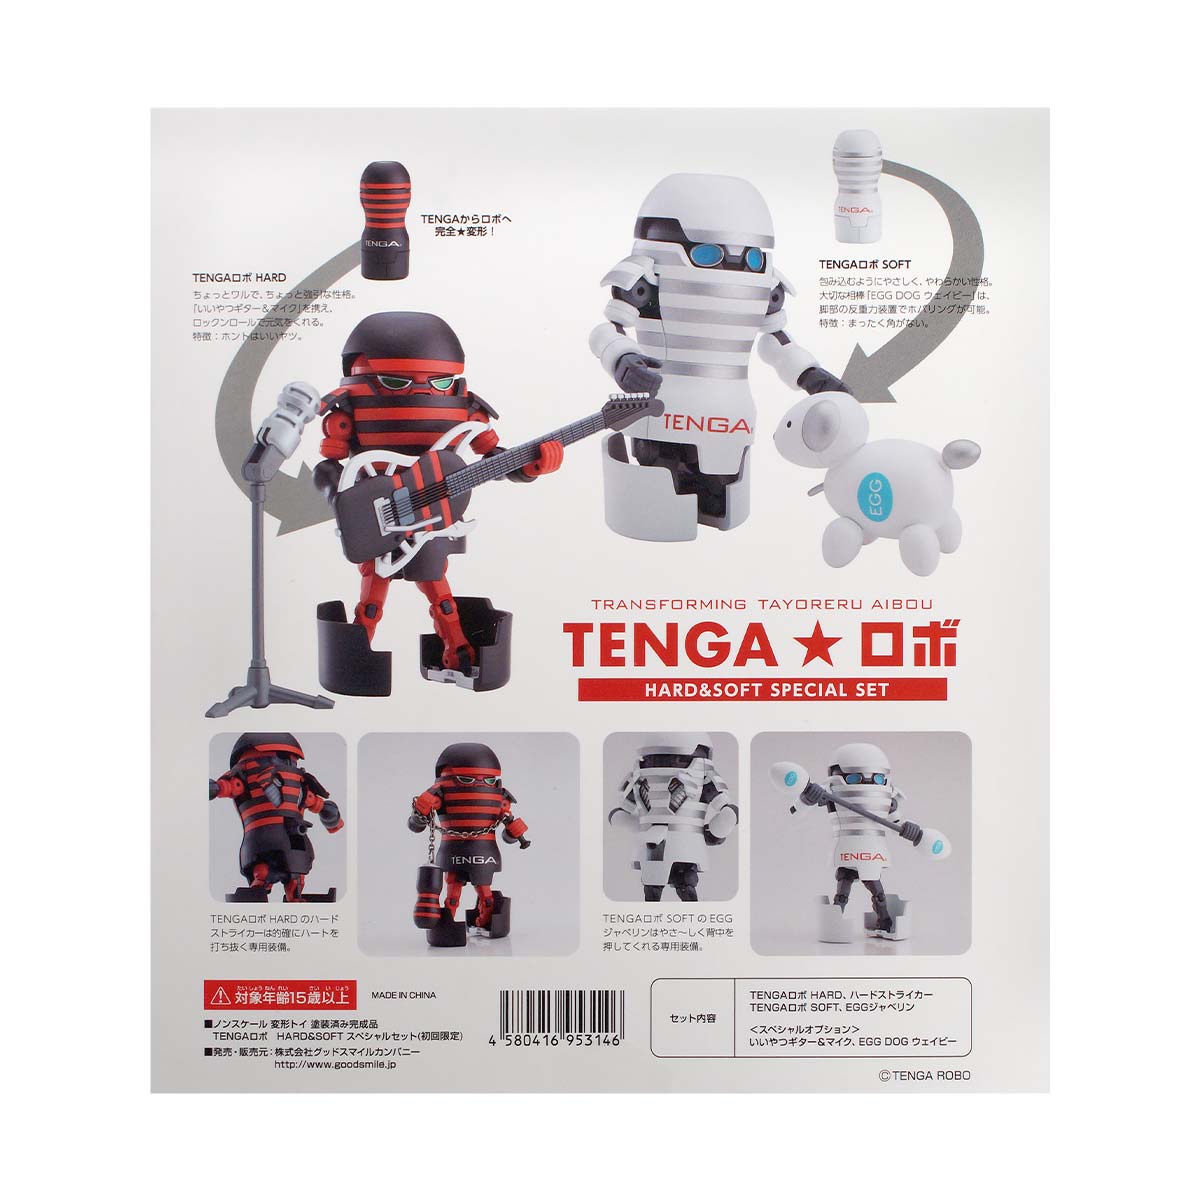 TENGA ROBO HARD & SOFT Special Set (初回限定版)-p_3